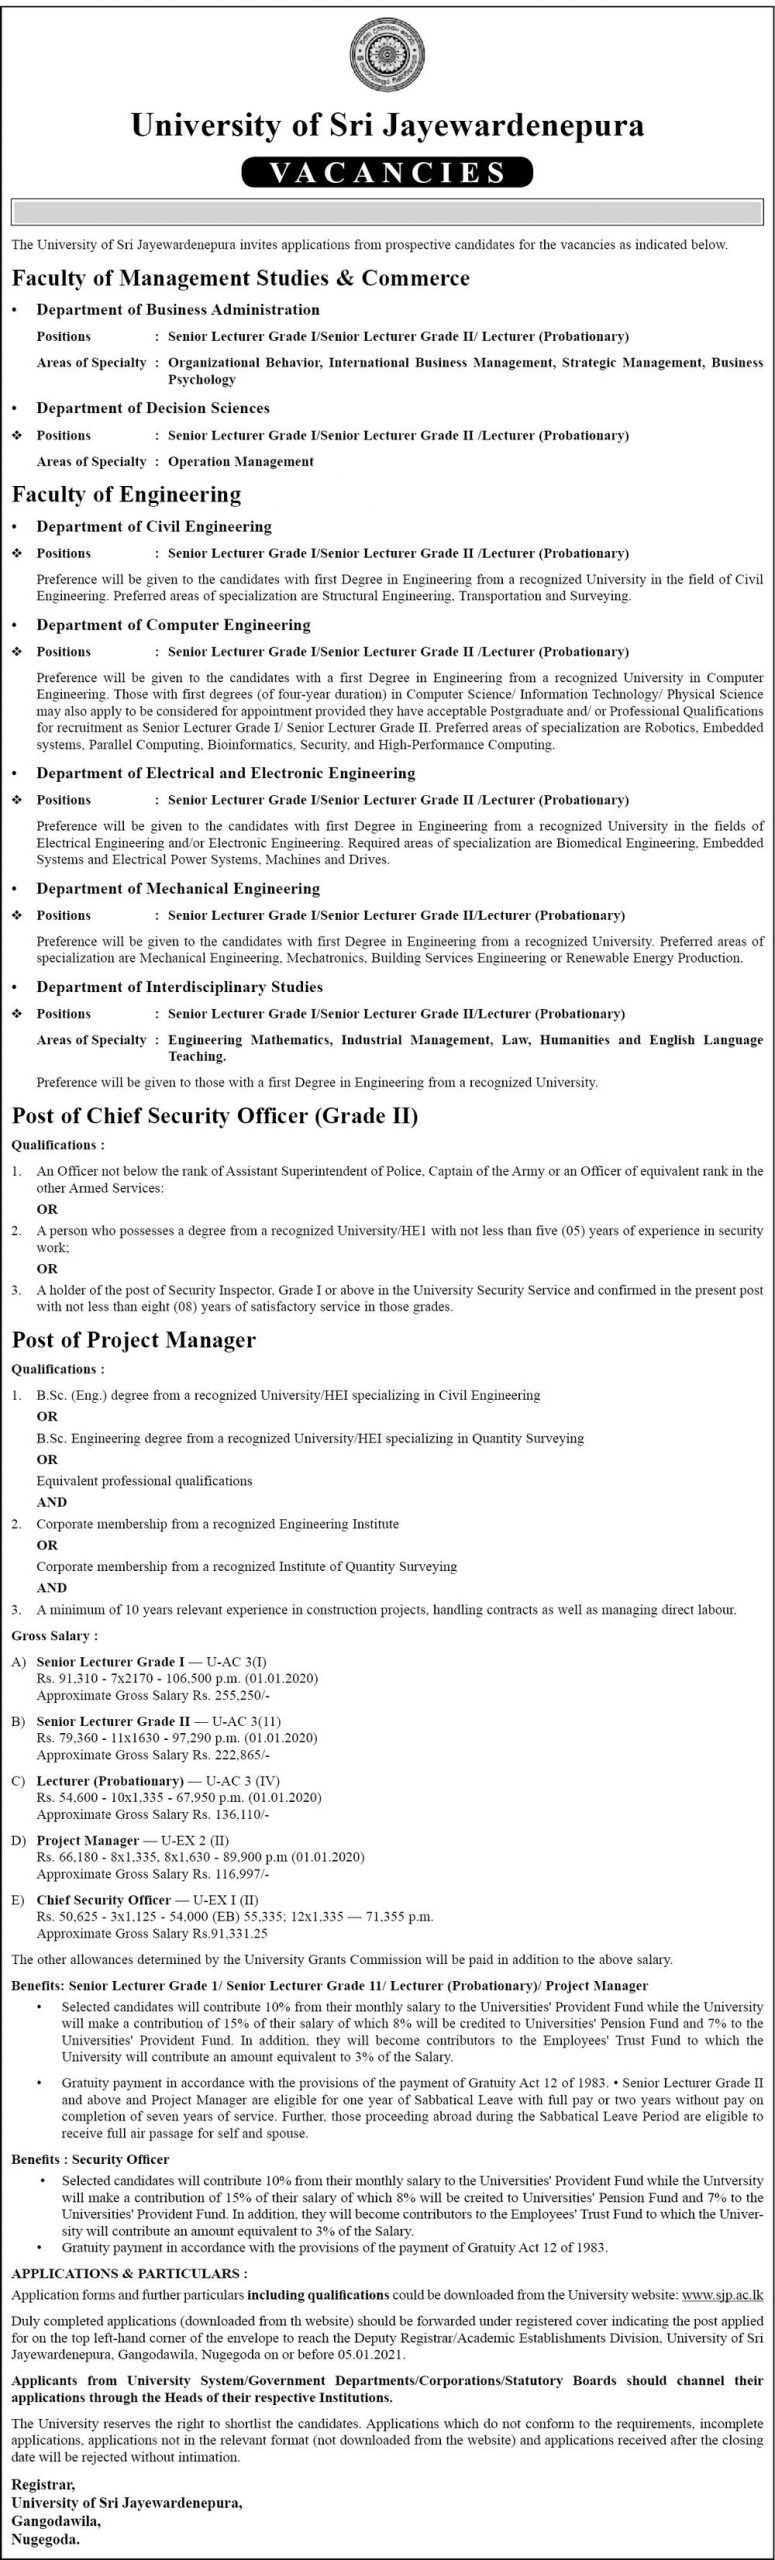 Vacancies at University of Sri Jayewardenepura